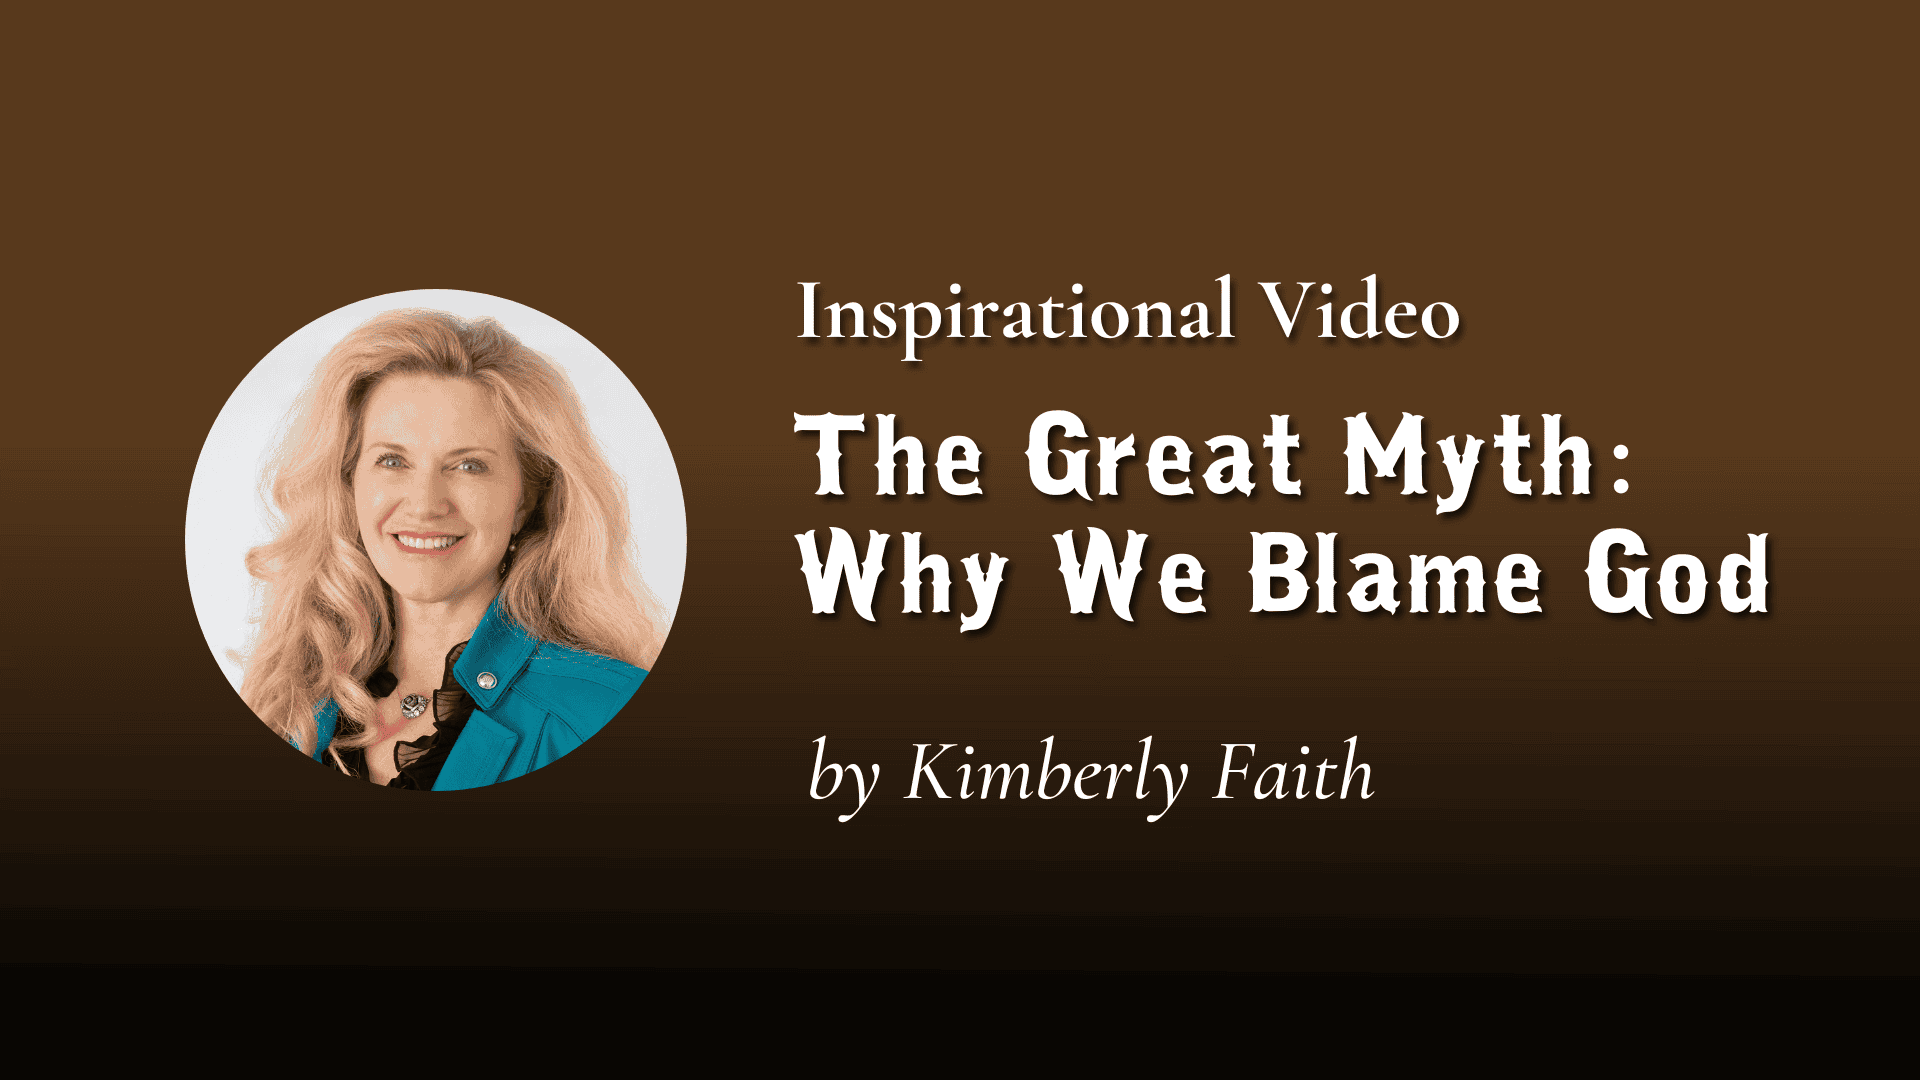 The Great Myth: Why We Blame God